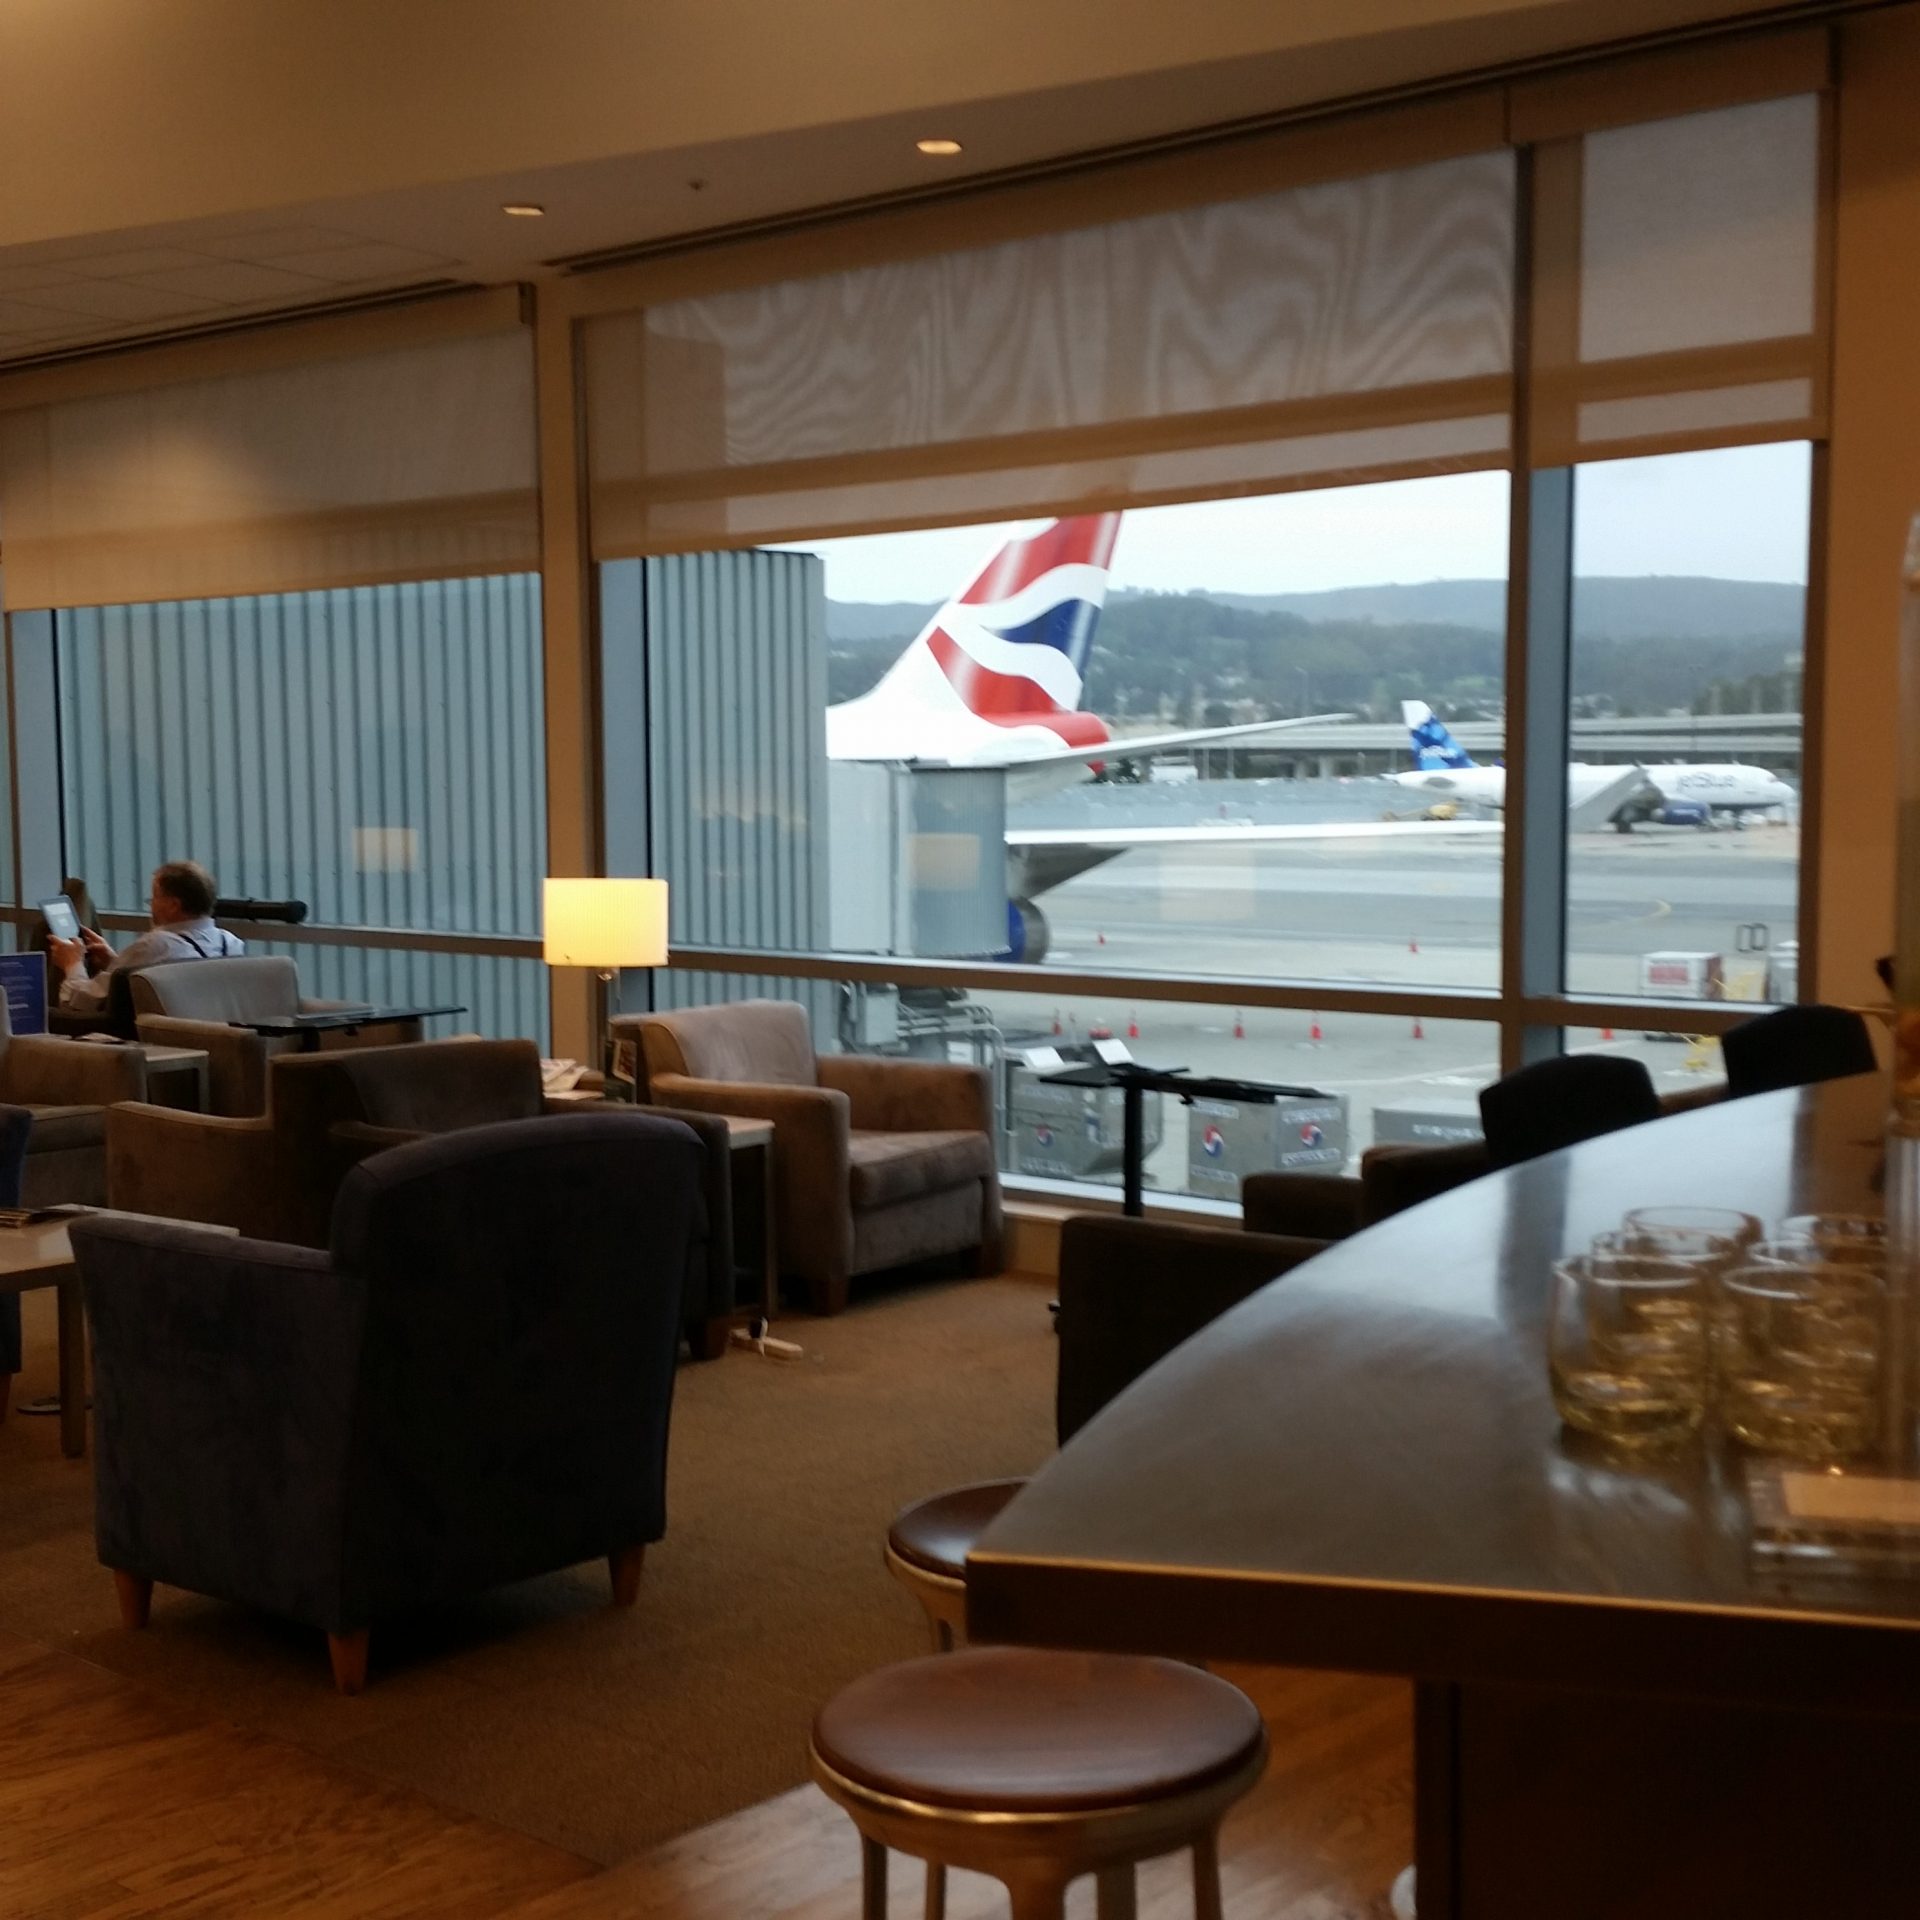 ba business class lounge plane sfo - British Airways First Class & Business Class Terraces Lounge San Francisco SFO Review